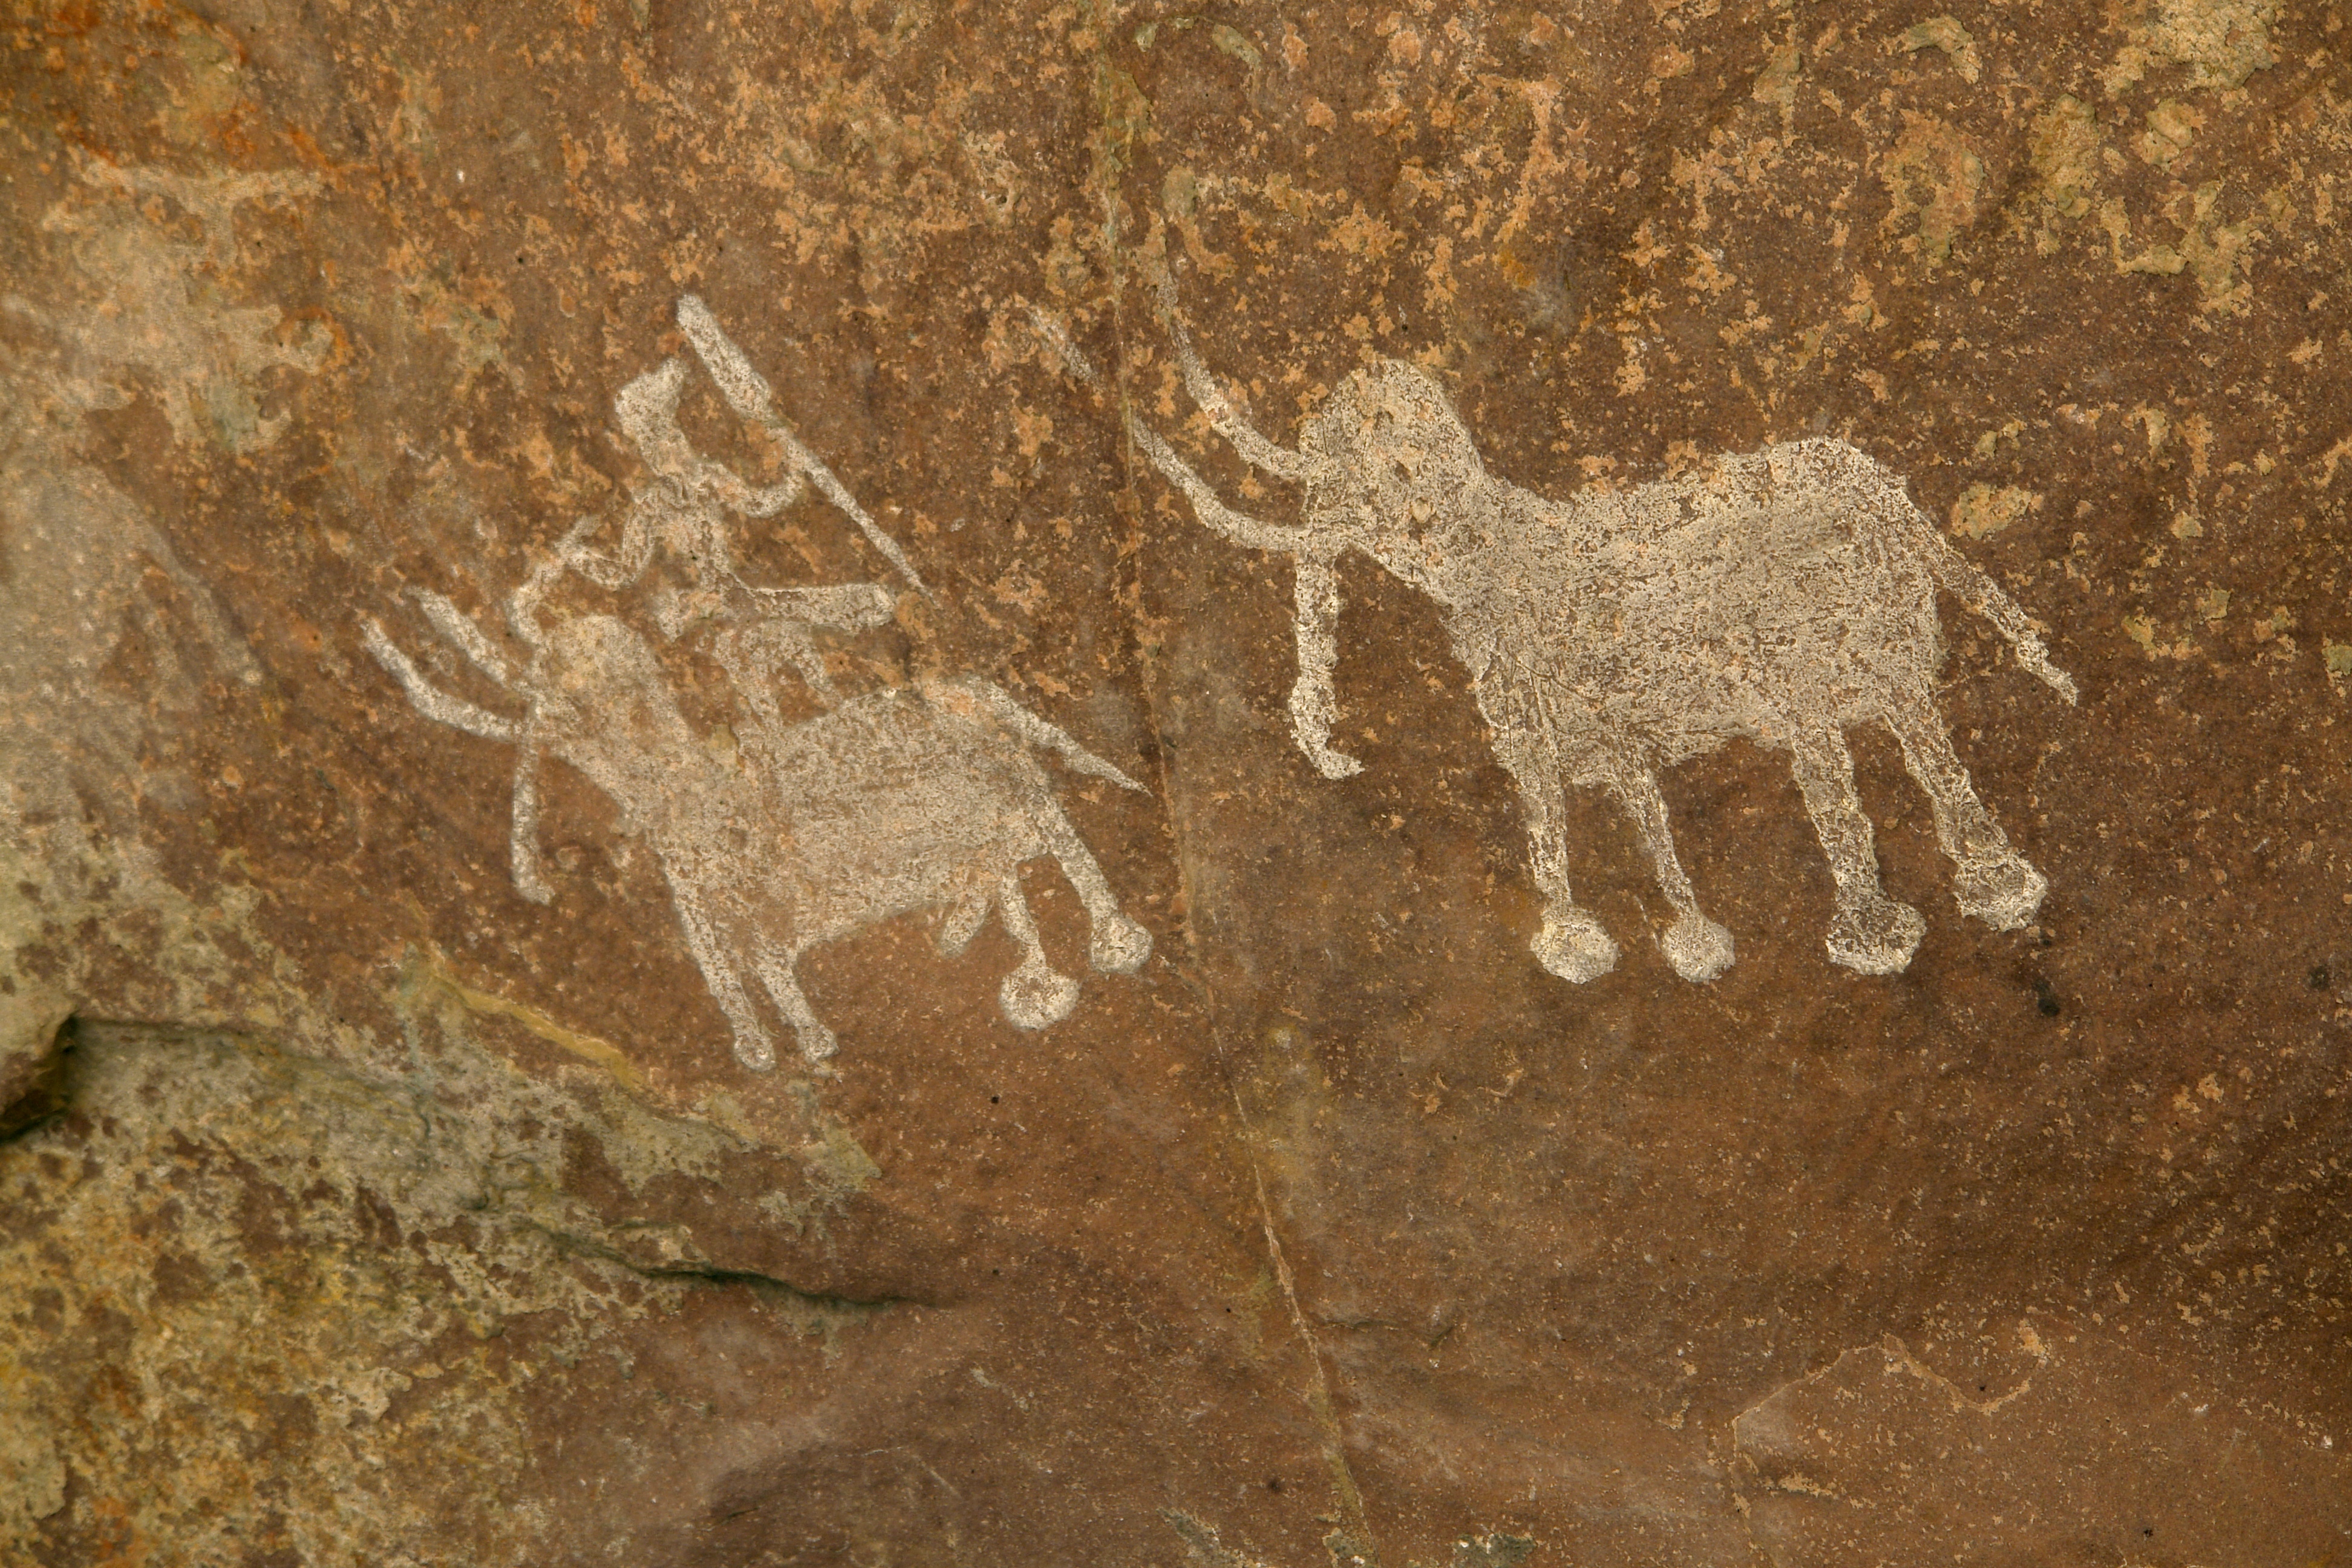 Rock painting, Bhimbetka, Raisen district, MP